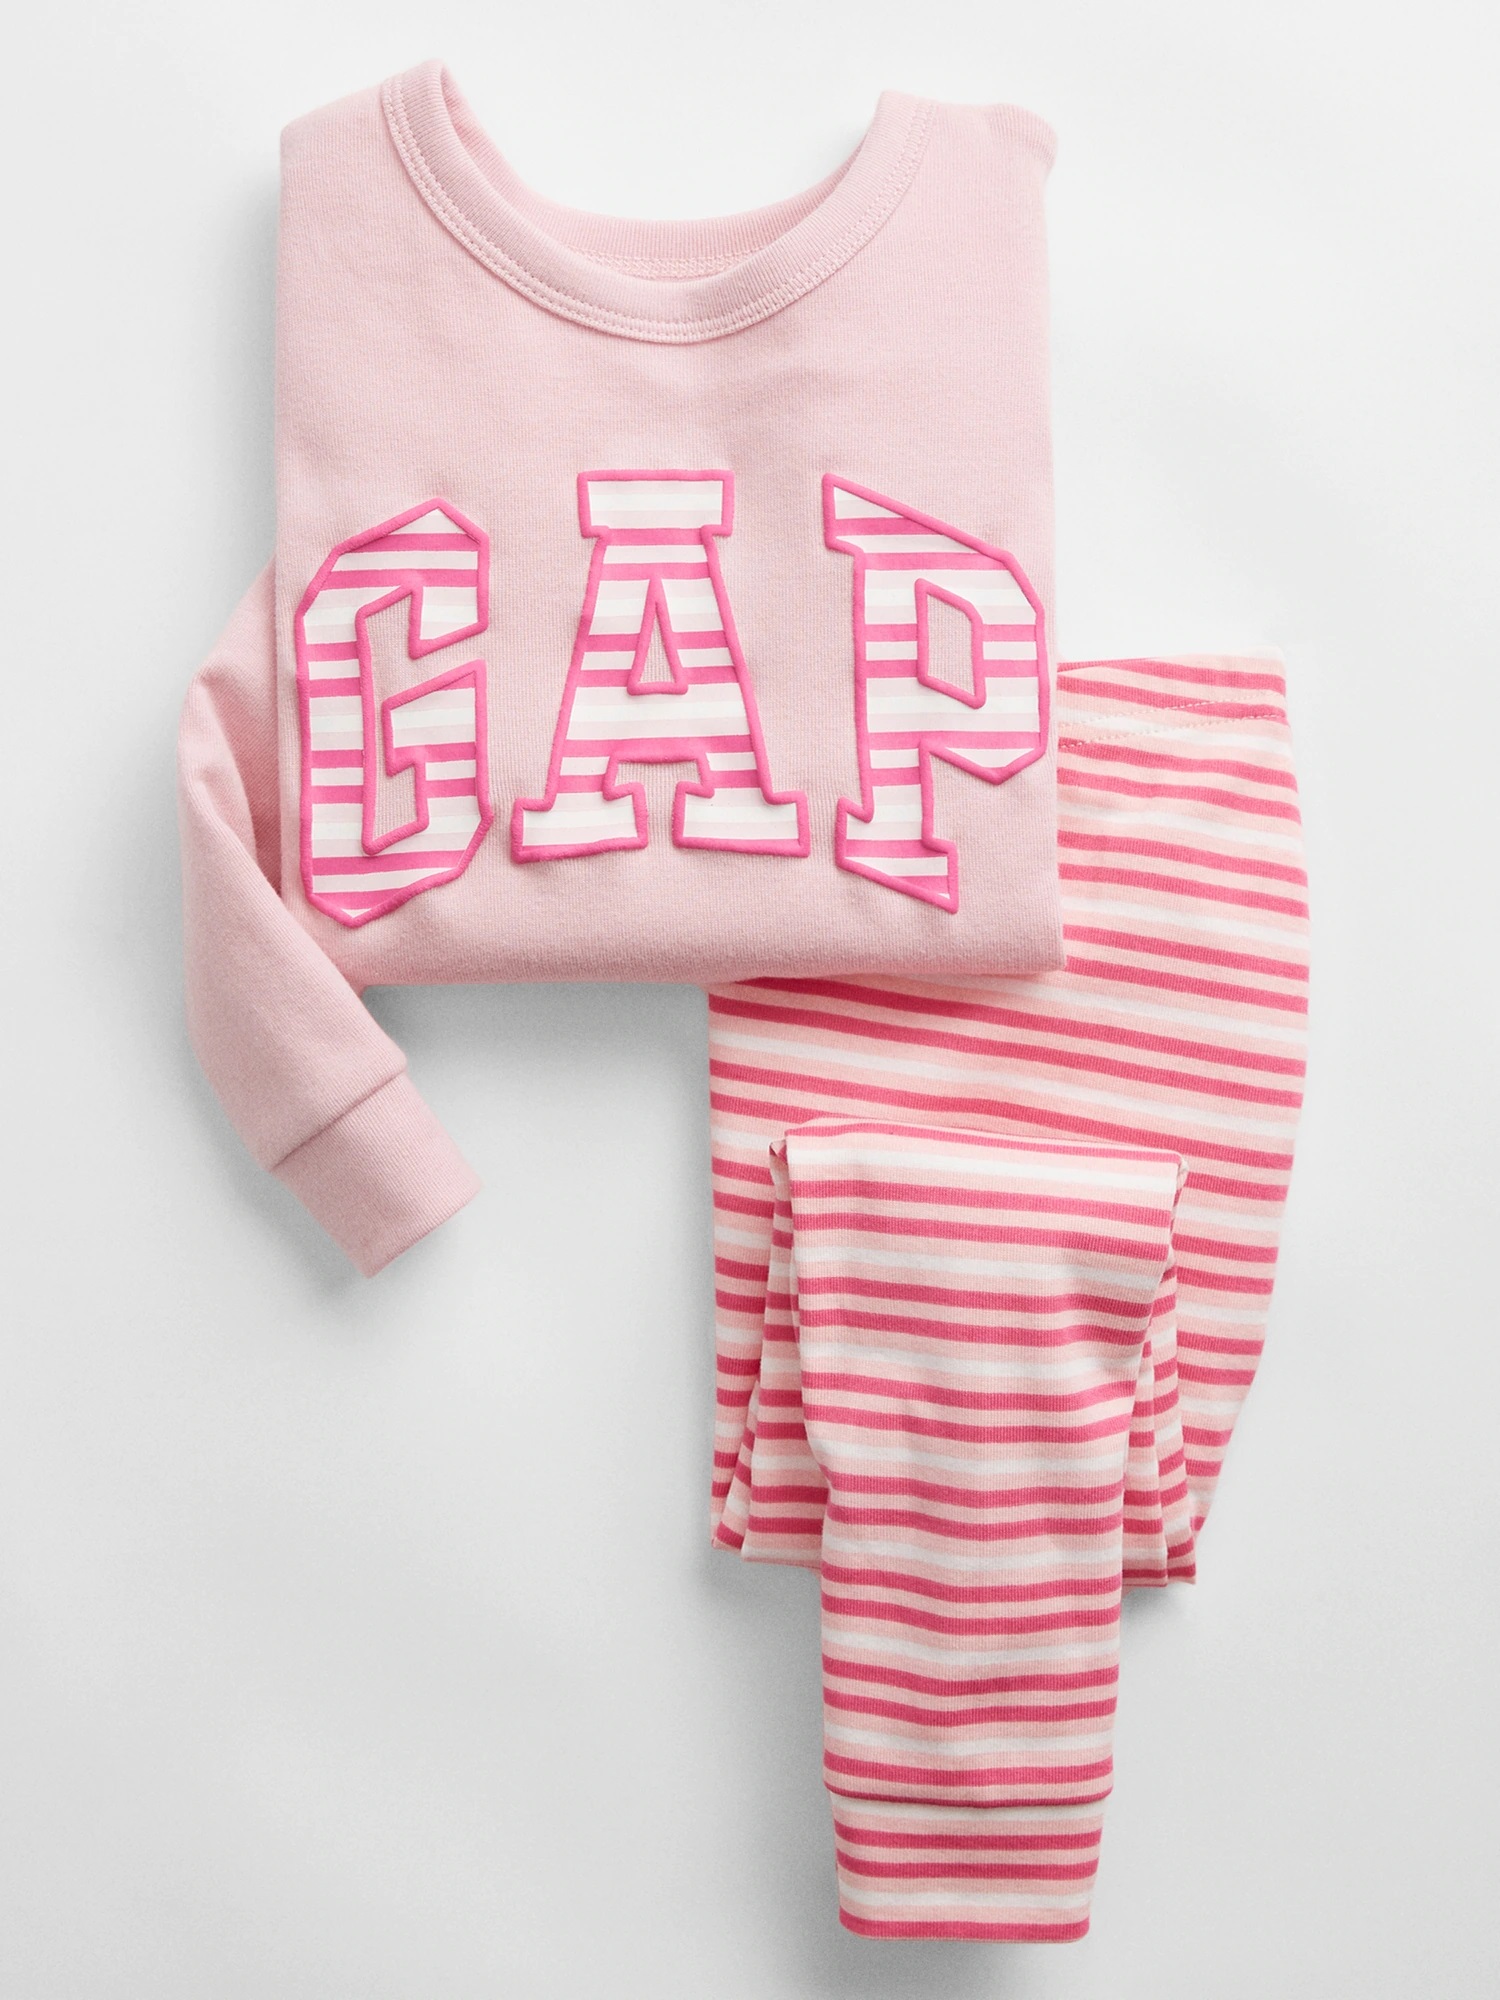 GAP Children's pajamas with logo - Boys